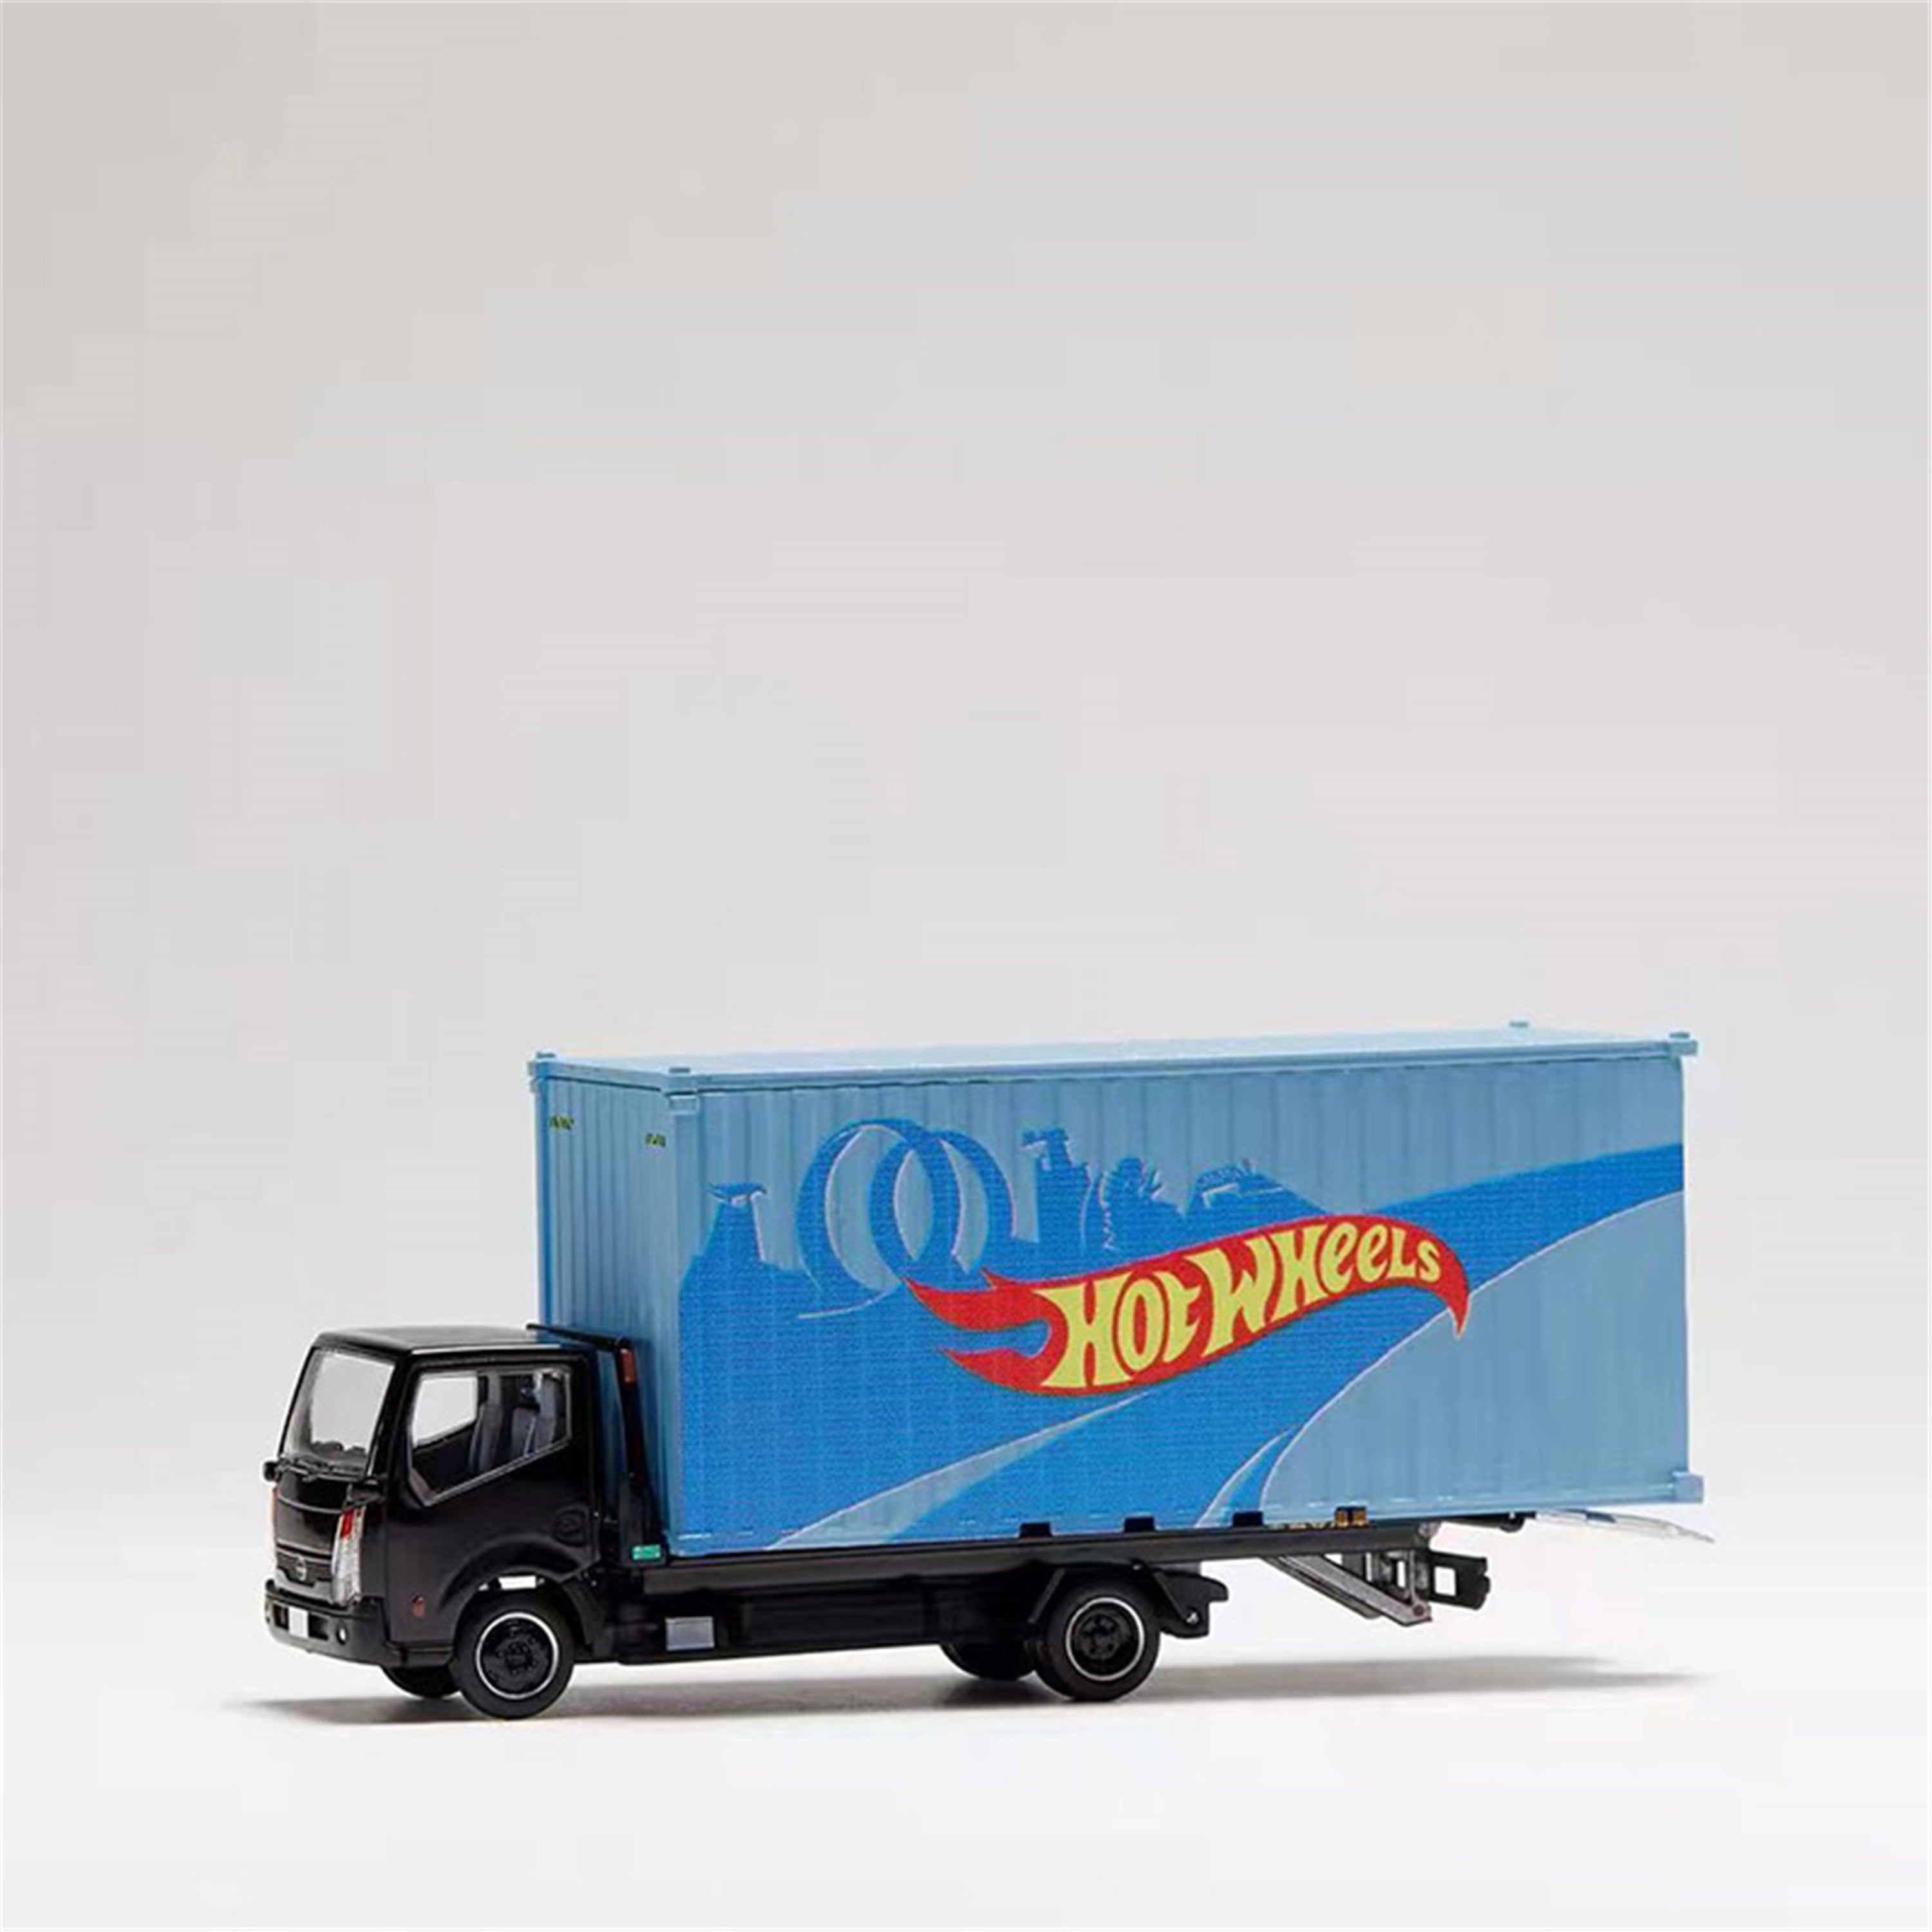 1/64 BRE DATSUN Hotwheels Takara Tomy Container - 164model